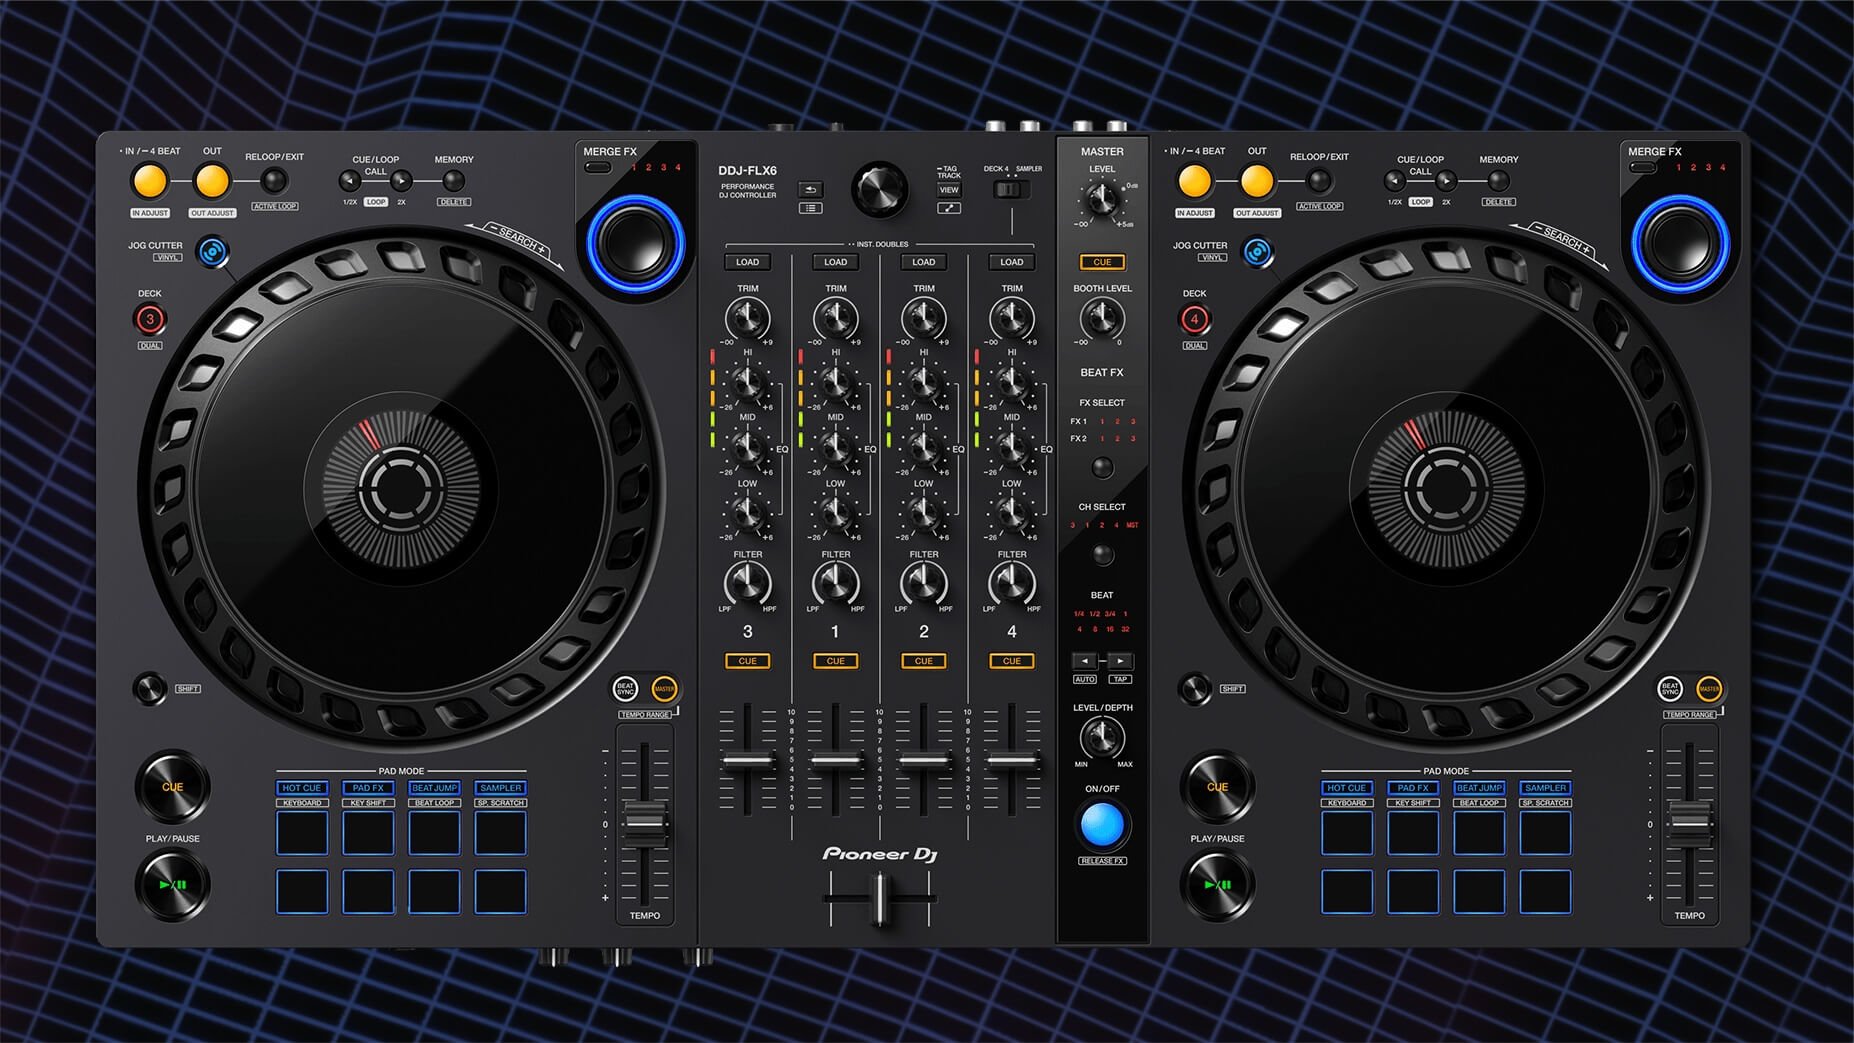 Pioneer DDJ-FLX6 4-channel DJ controller for rekordbox and Serato DJ Pro